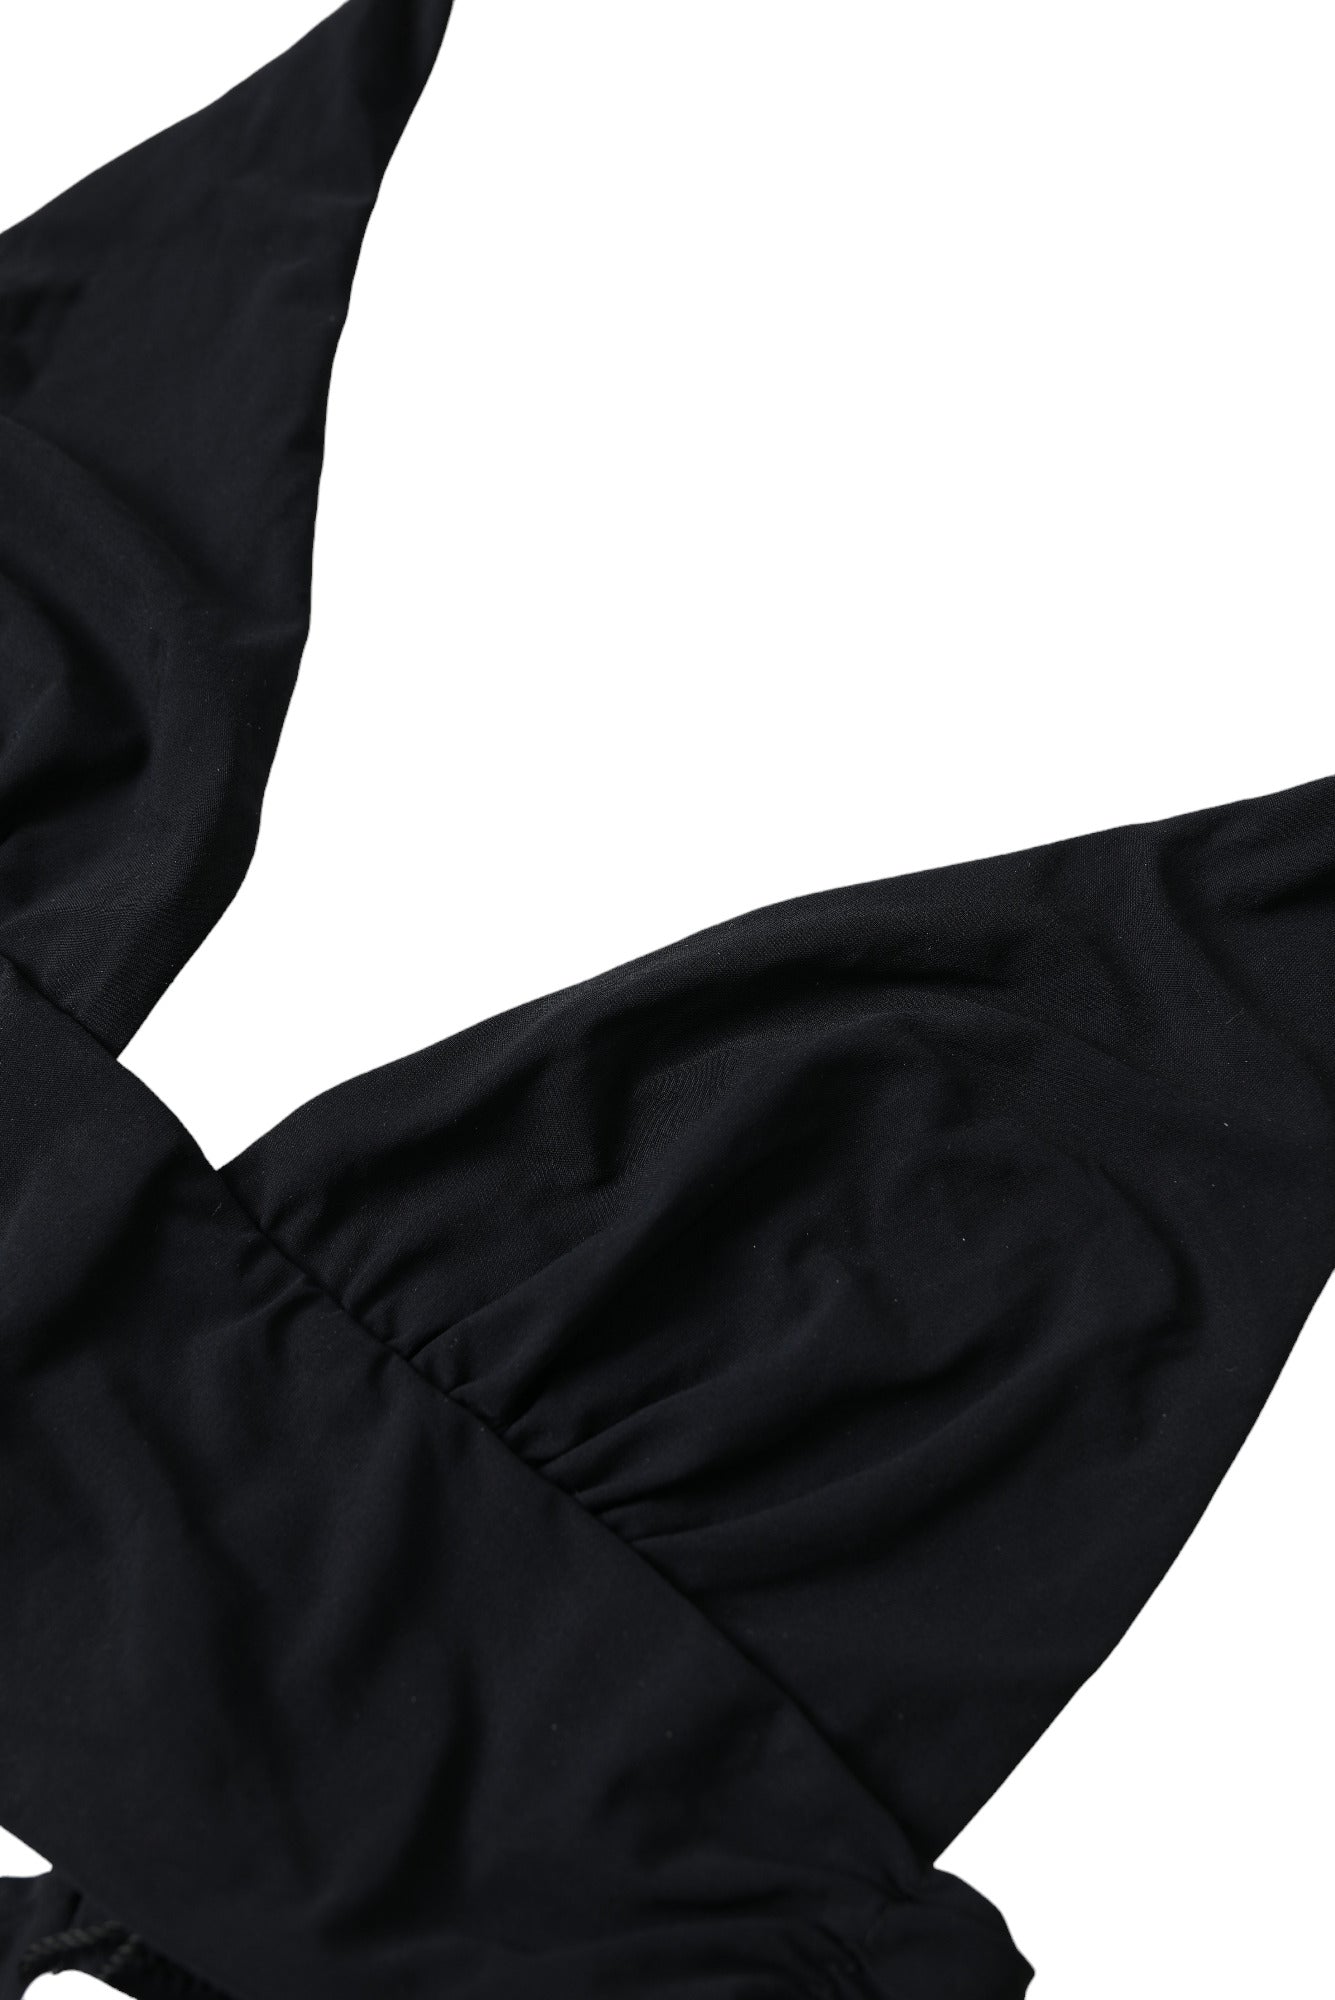 Dolce & Gabbana Elegant Black Bikini Top